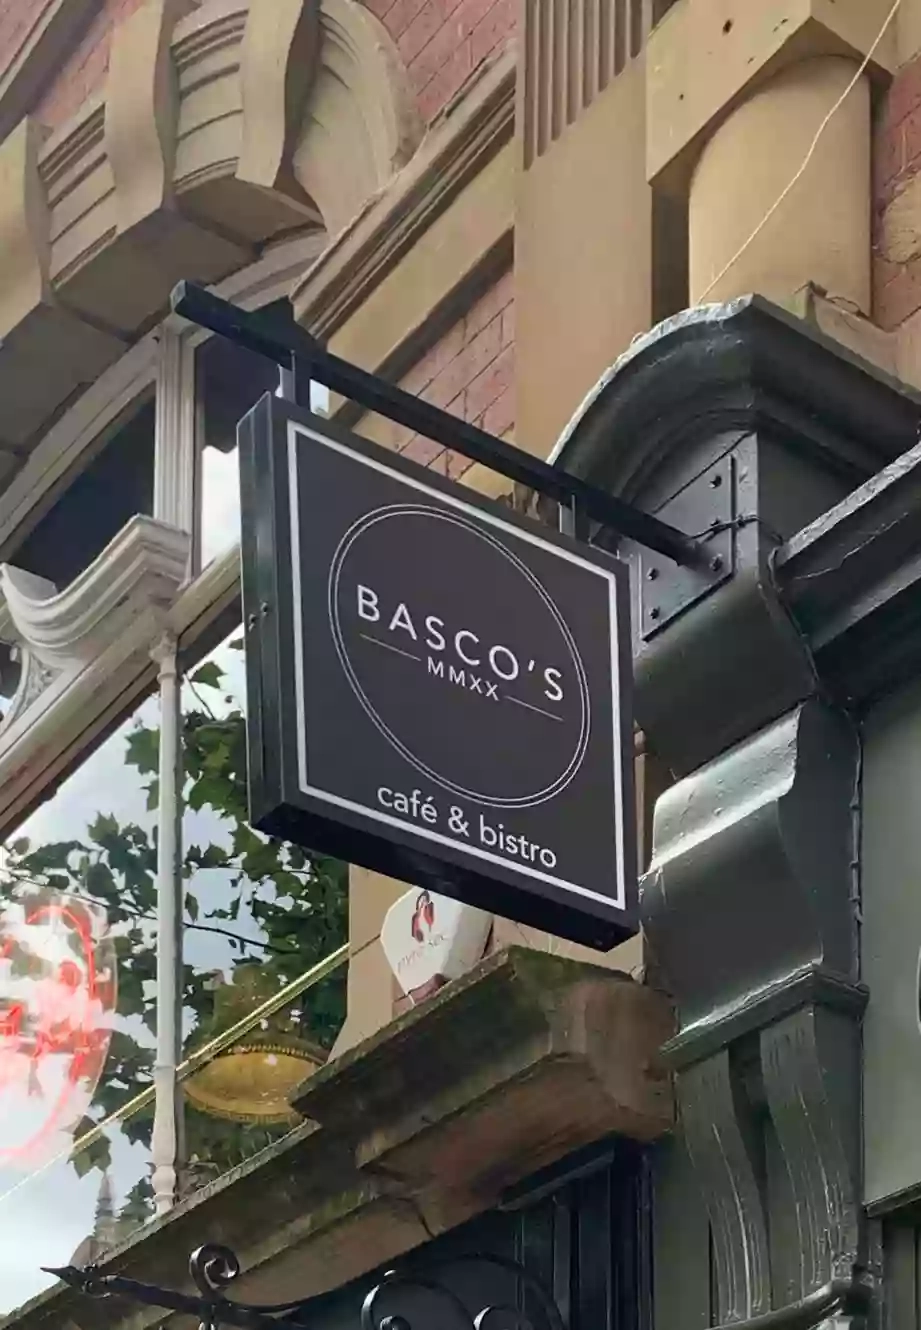 BASCO'S cafe & bistro